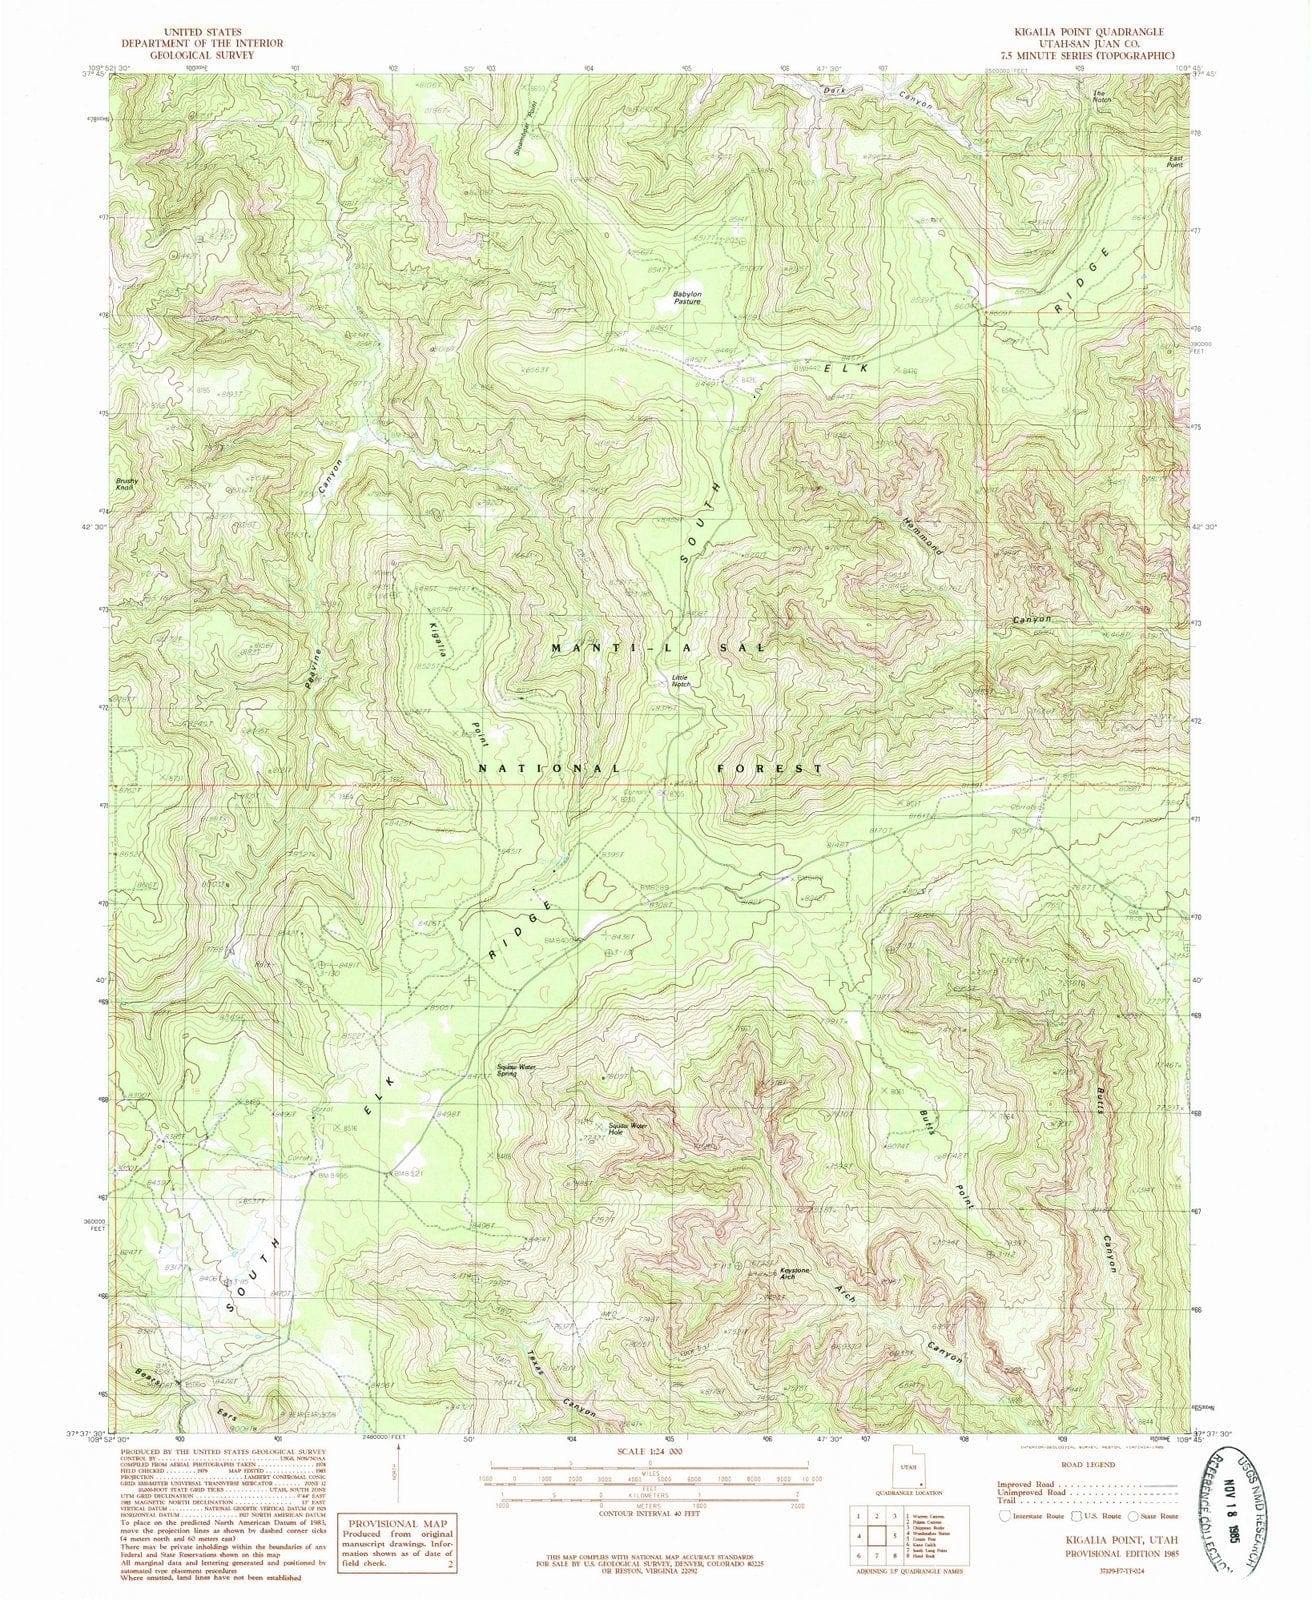 1985 Kigalia Point, UT - Utah - USGS Topographic Map